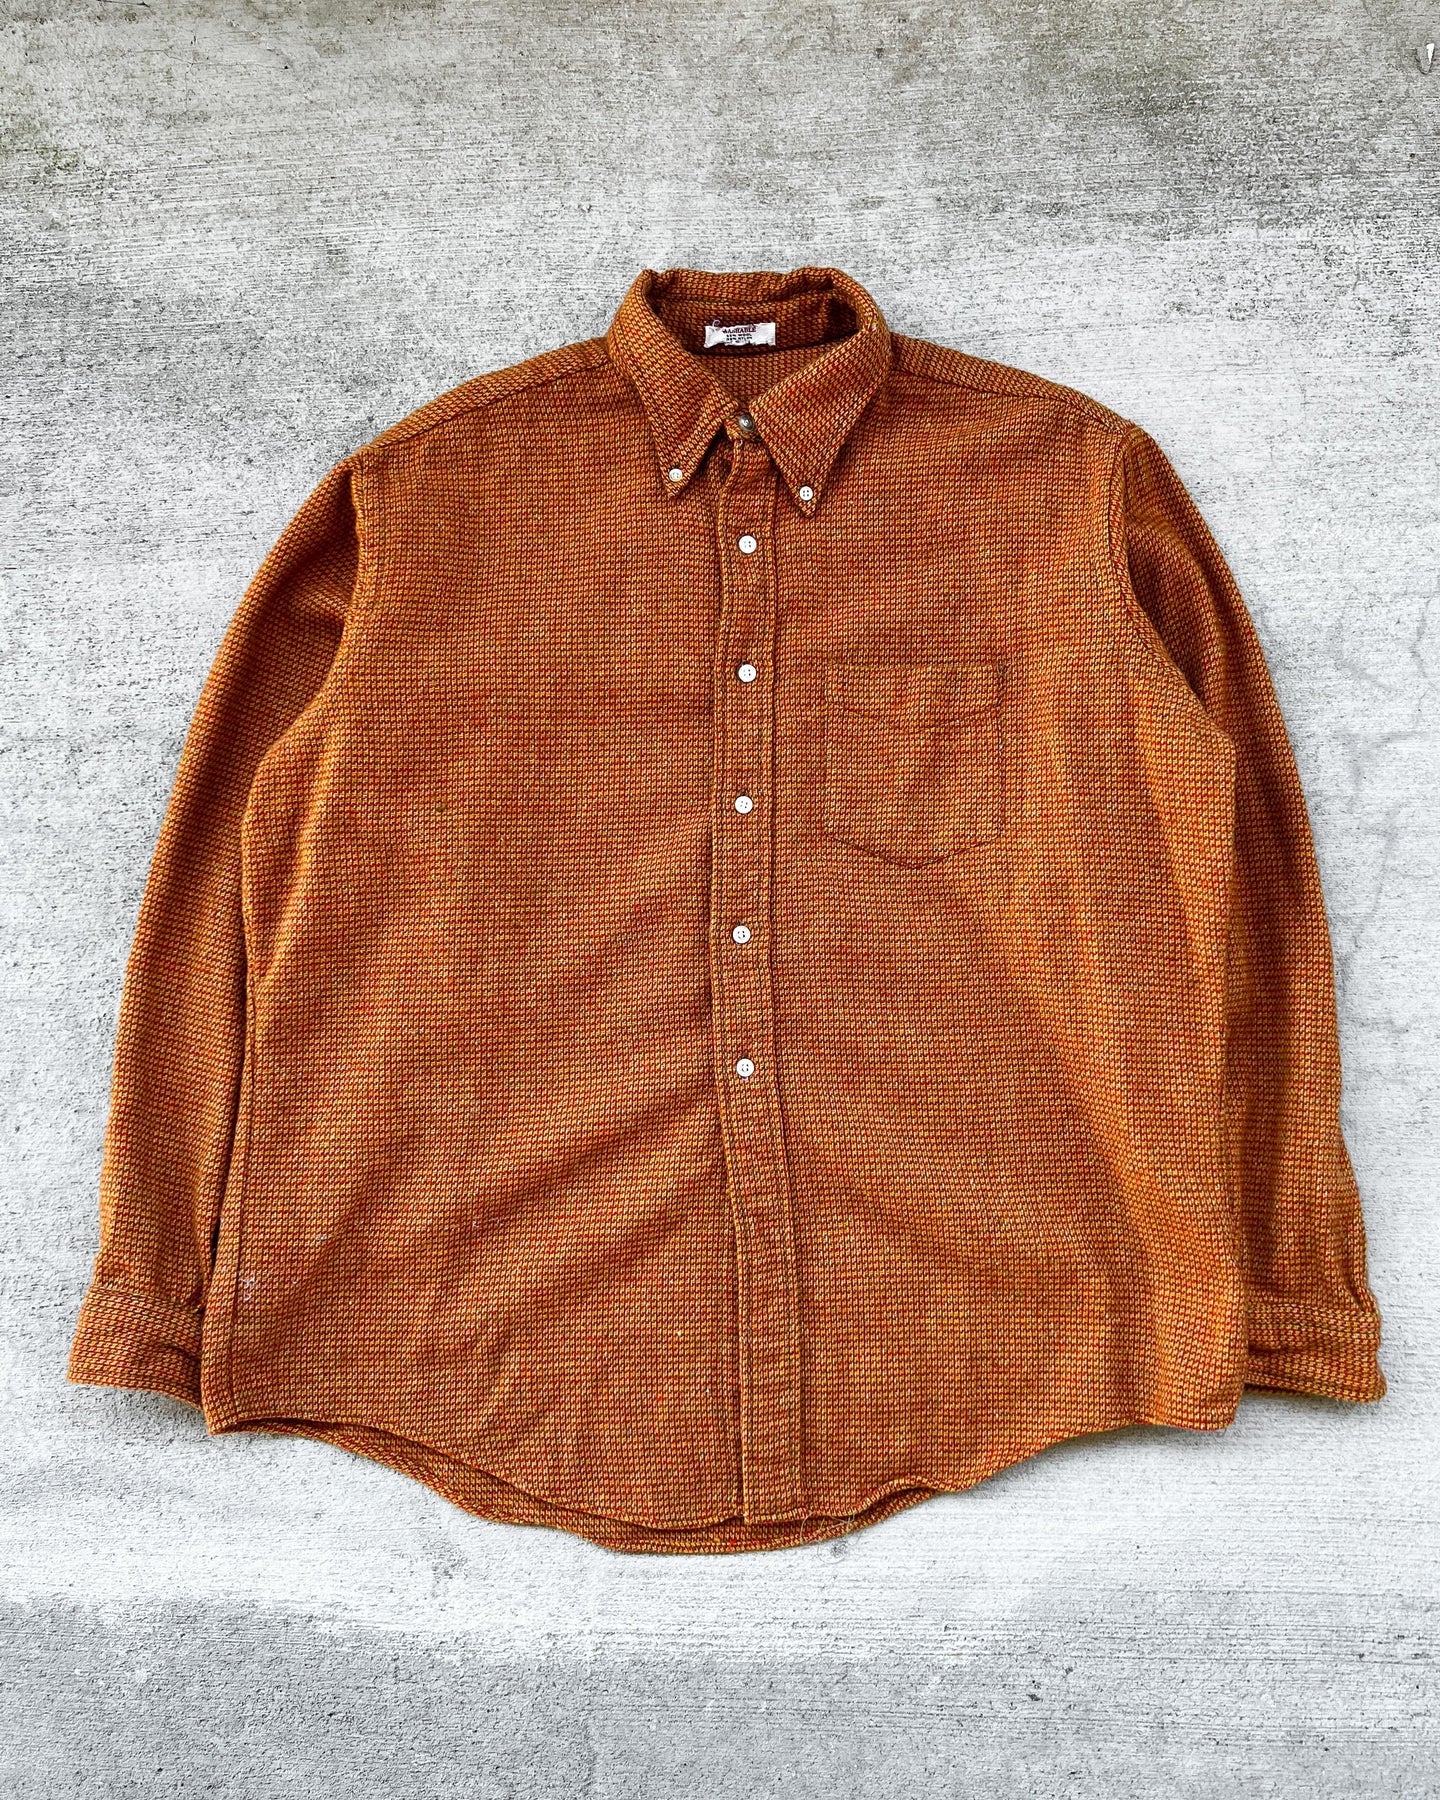 1970s Multicolor Flannel Shirt - Size X-Large